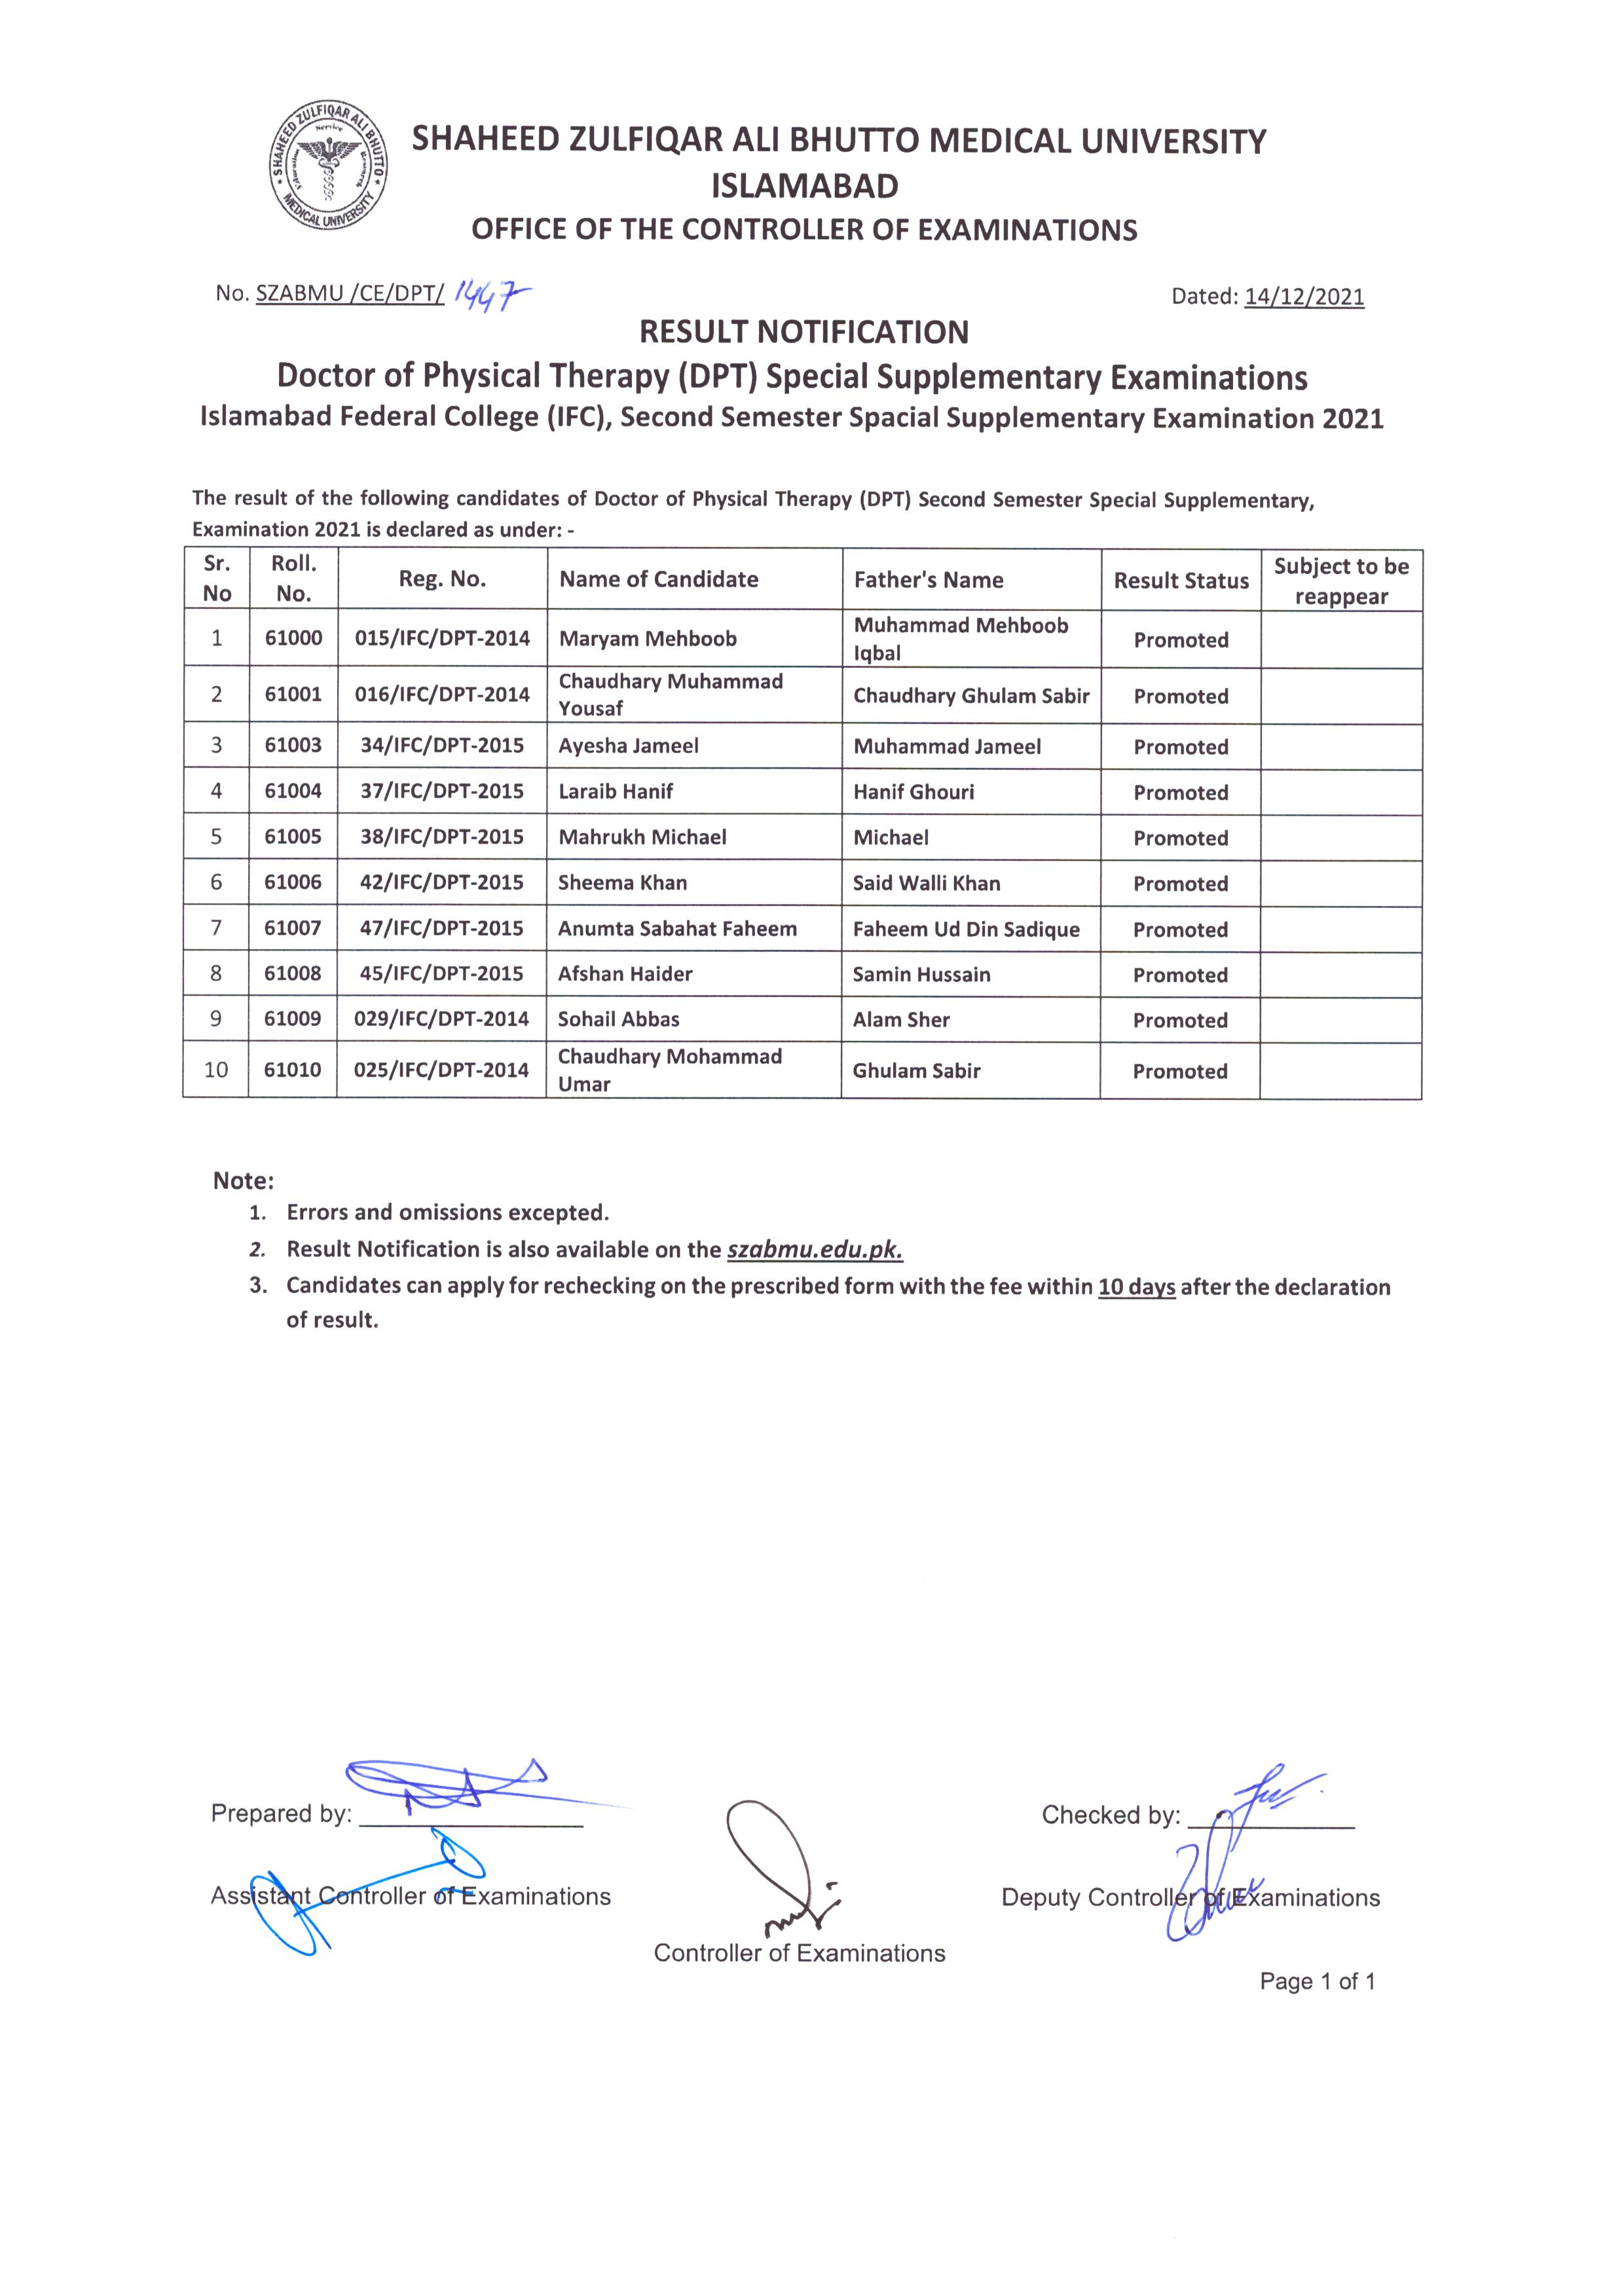 Result Notification of DPT Special Supplementary Examinations